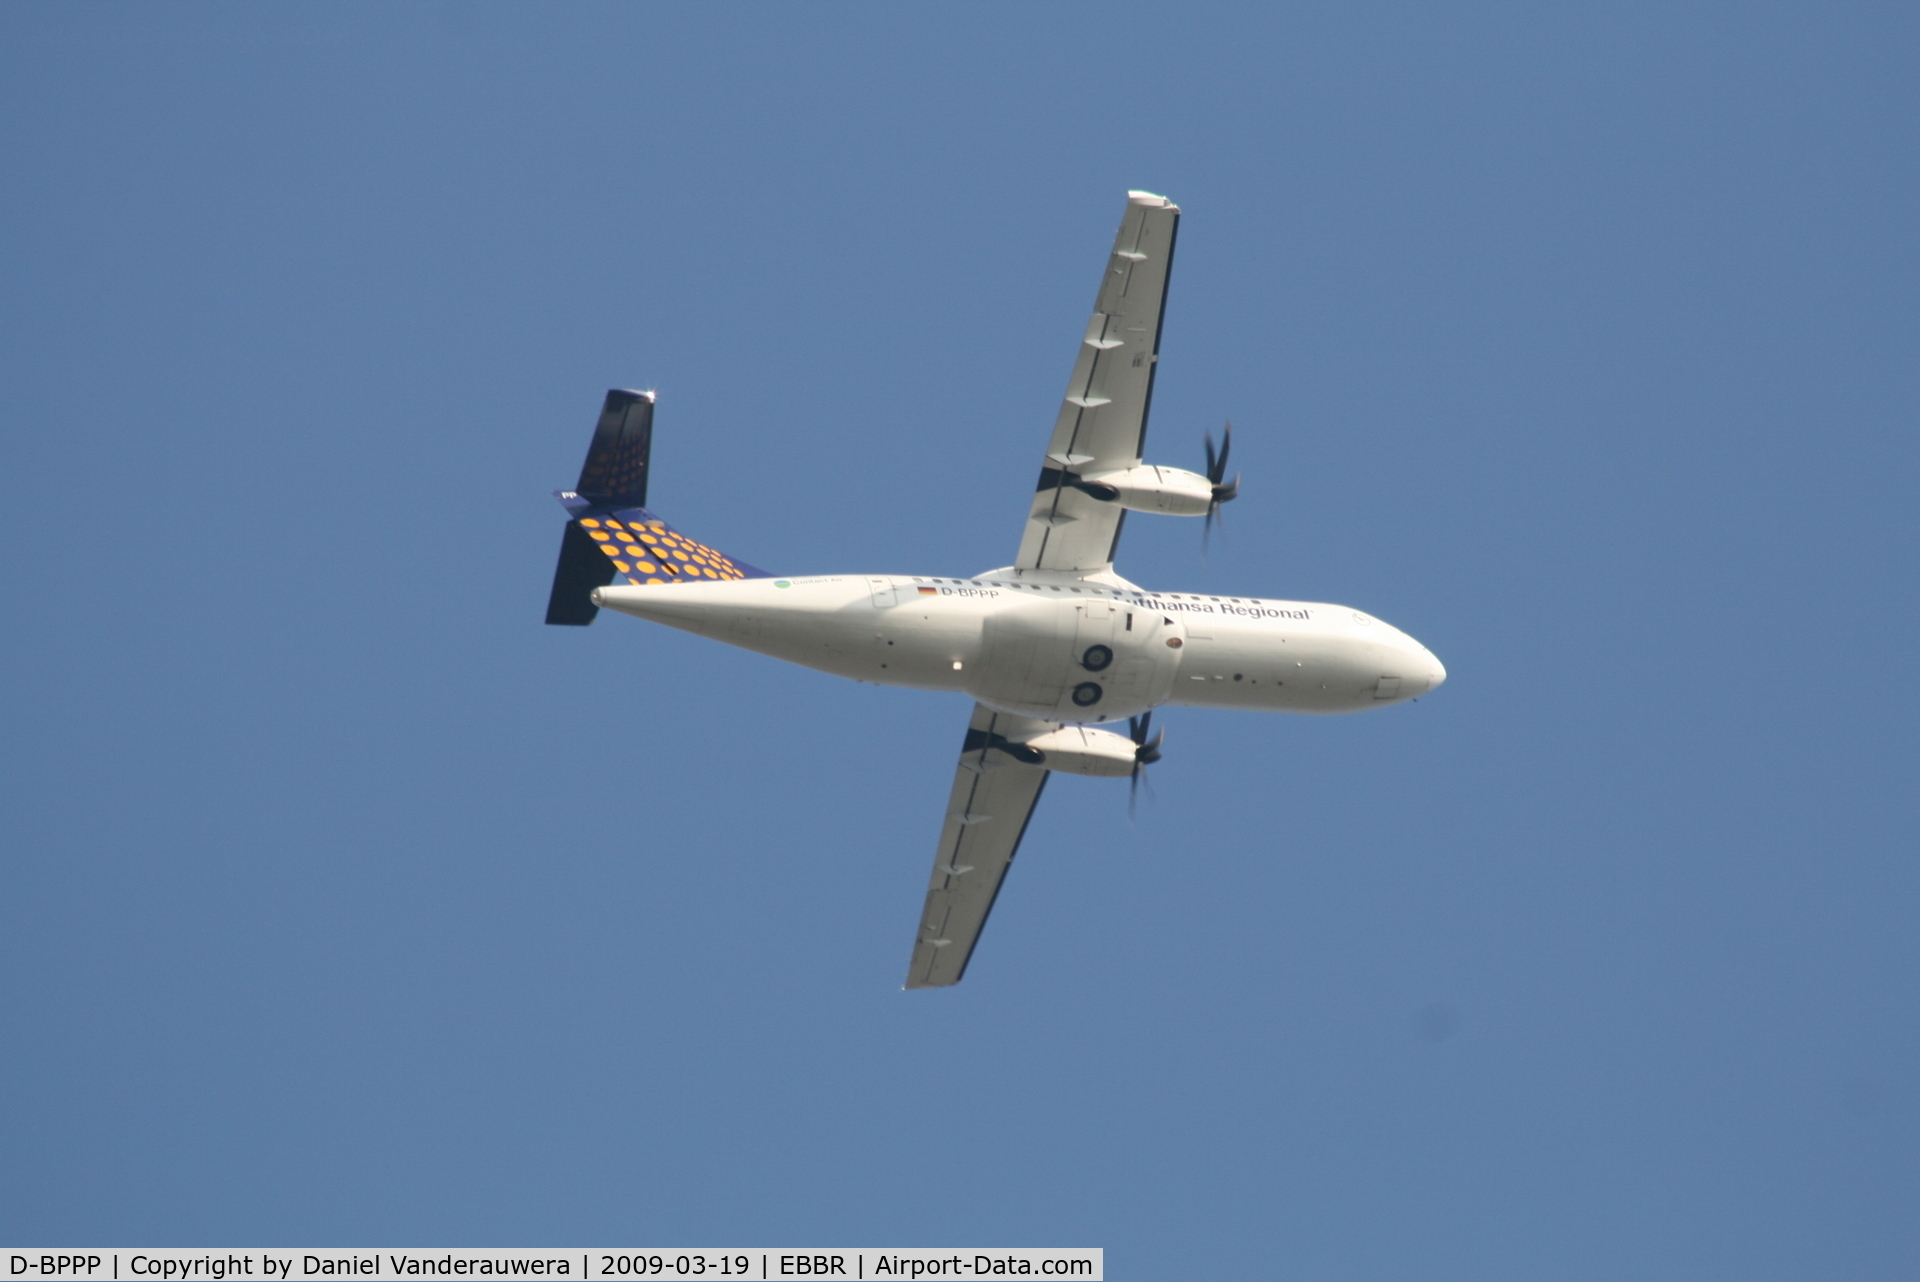 D-BPPP, 1999 ATR 42-500 C/N 581, Flight LH4631 is taking off from RWY 07R